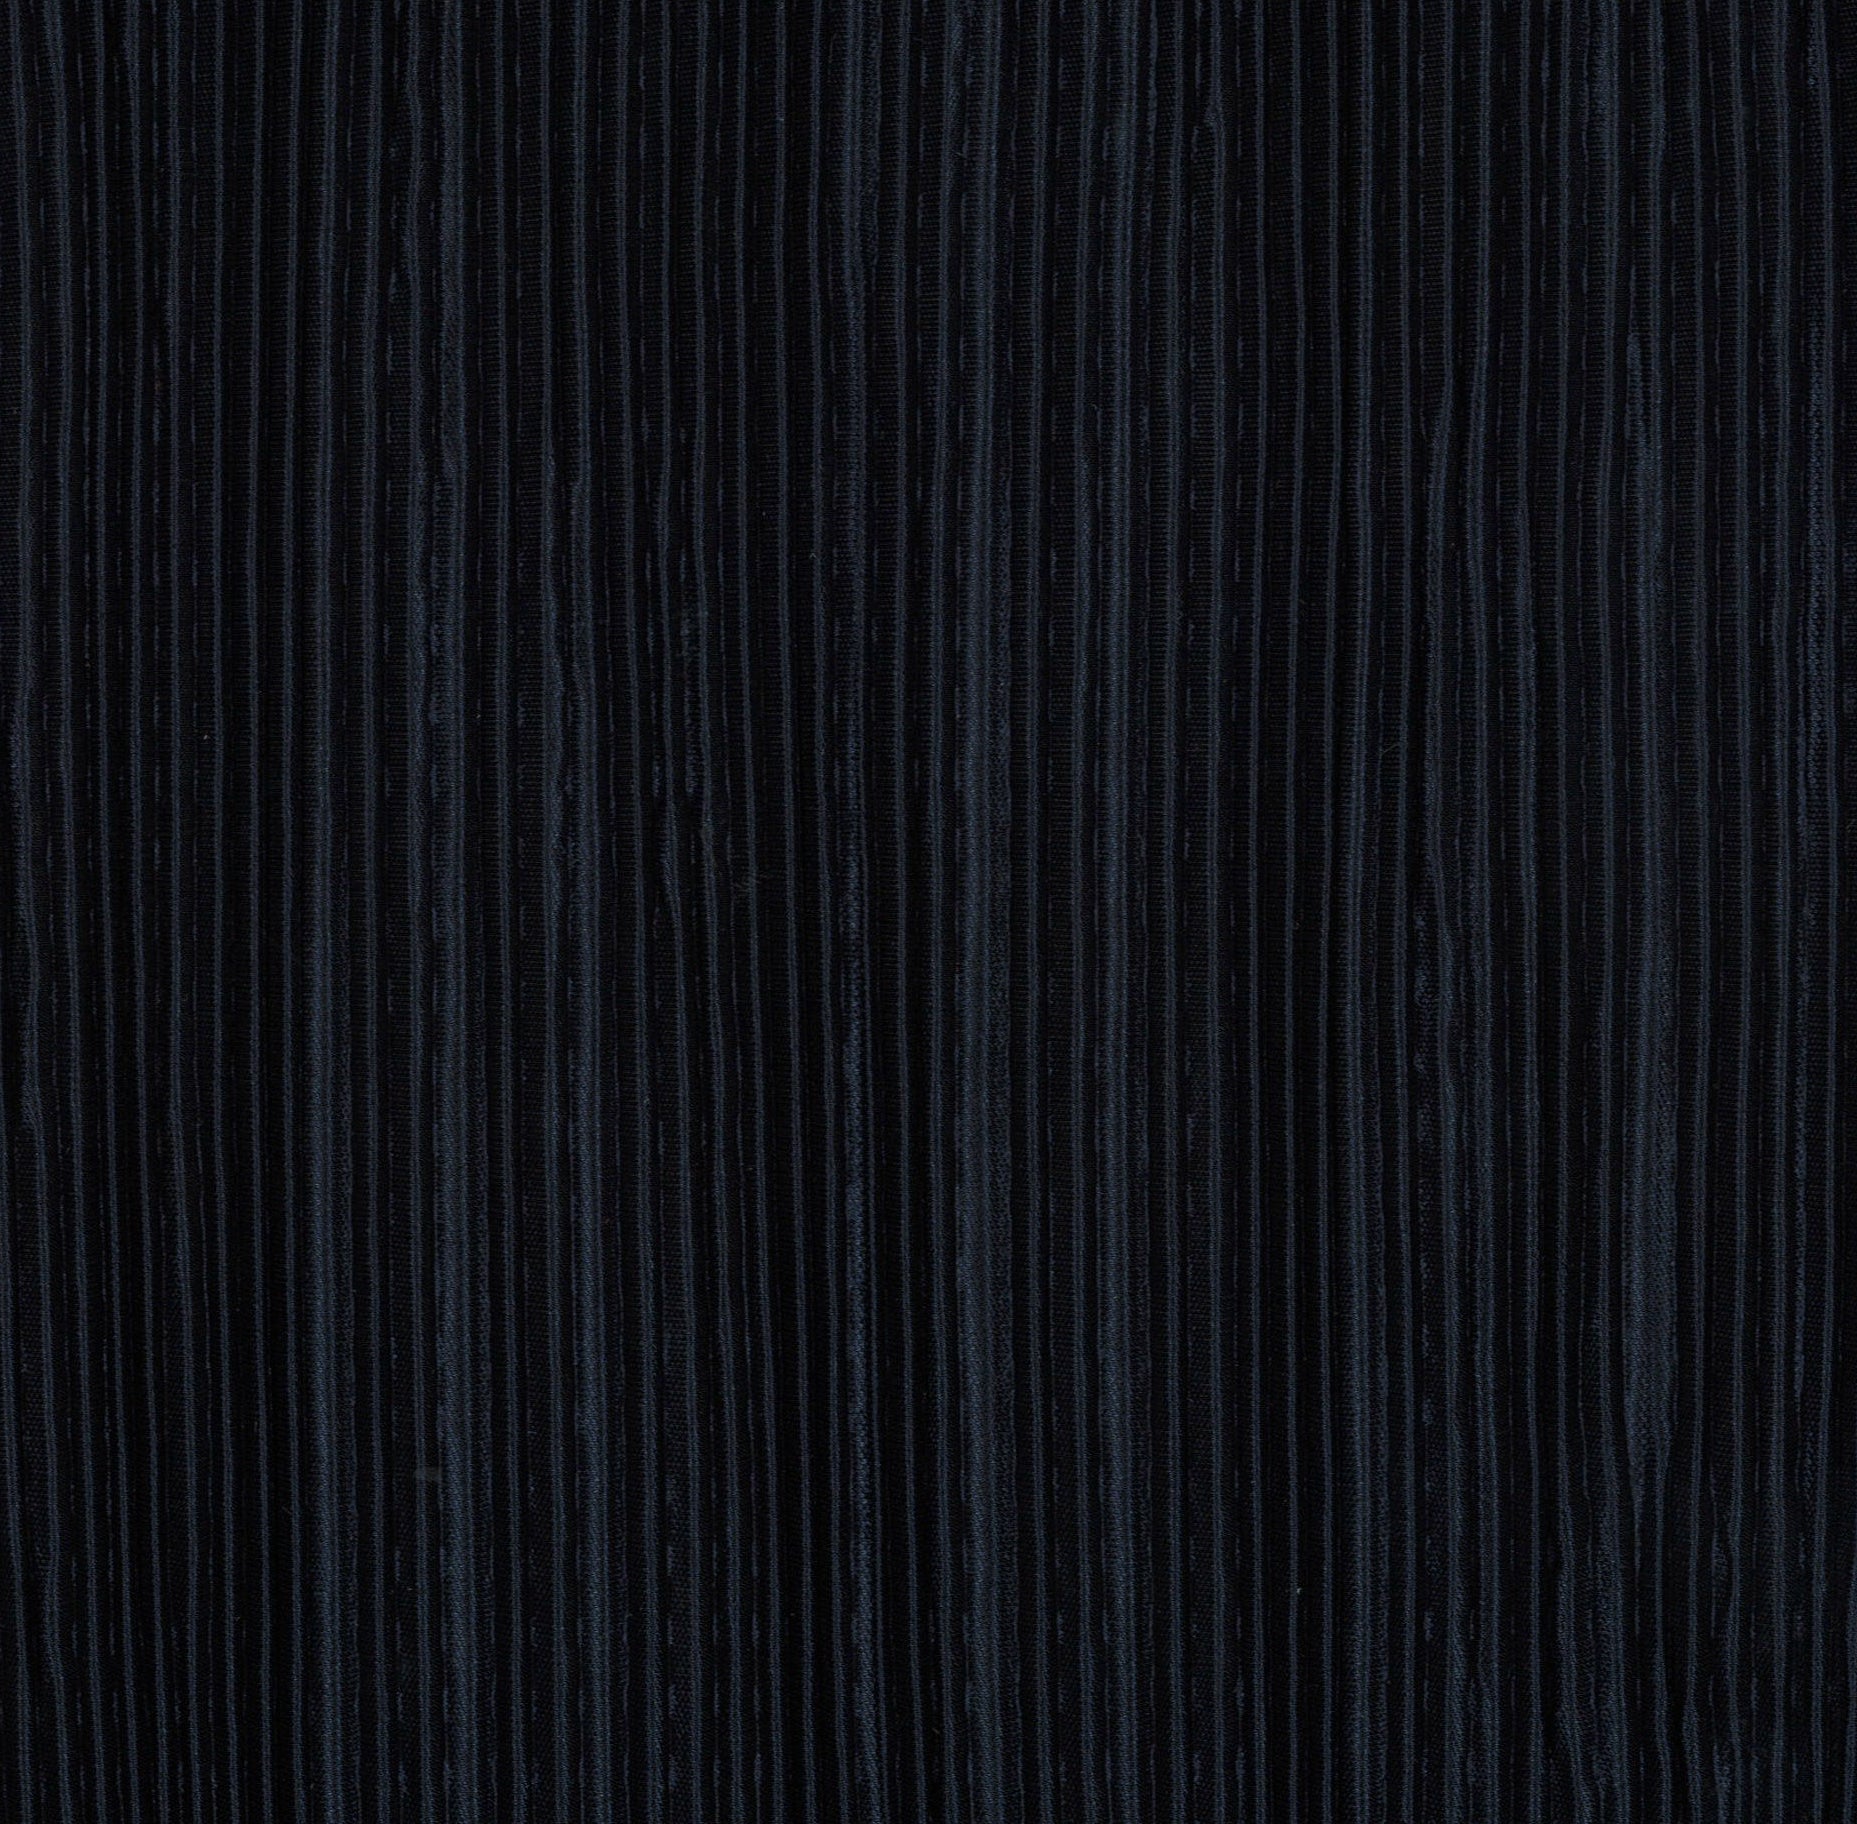 9761-08 Dark Navy Polyester Pleat Plain Dyed 100% 180g/yd 56" blue knit plain dyed pleat polyester Solid Color, Pleat - knit fabric - woven fabric - fabric company - fabric wholesale - fabric b2b - fabric factory - high quality fabric - hong kong fabric - fabric hk - acetate fabric - cotton fabric - linen fabric - metallic fabric - nylon fabric - polyester fabric - spandex fabric - chun wing hing - cwh hk - fabric worldwide ship - 針織布 - 梳織布 - 布料公司- 布料批發 - 香港布料 - 秦榮興